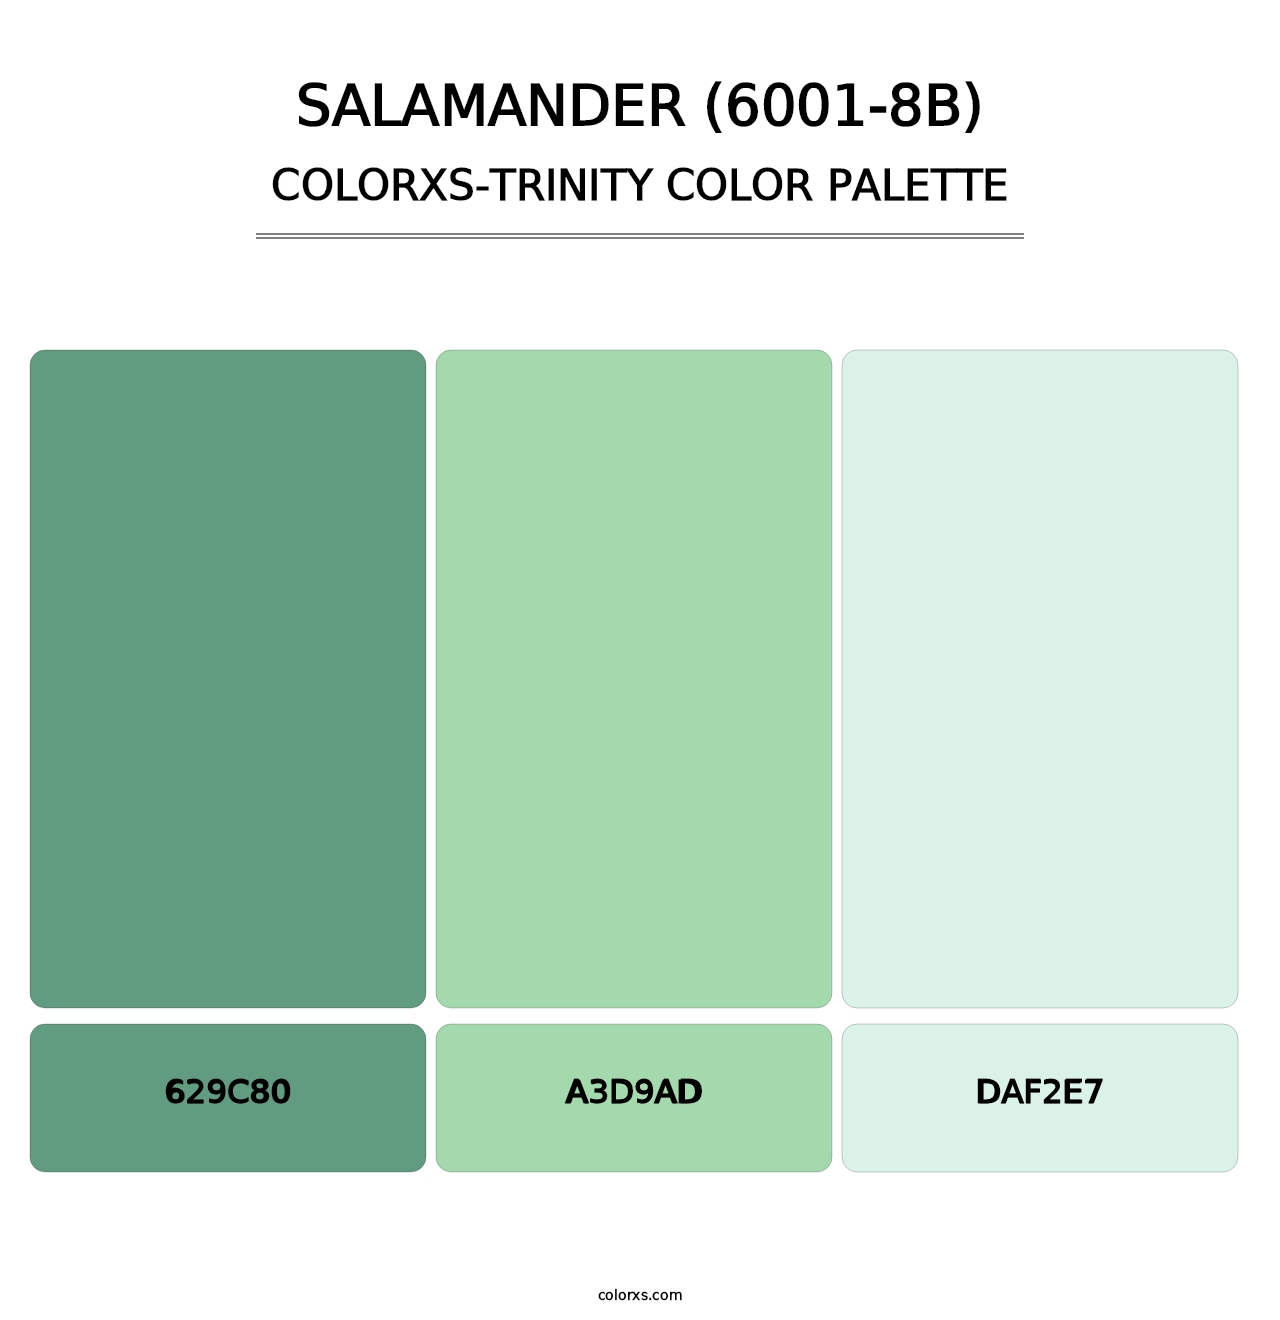 Salamander (6001-8B) - Colorxs Trinity Palette